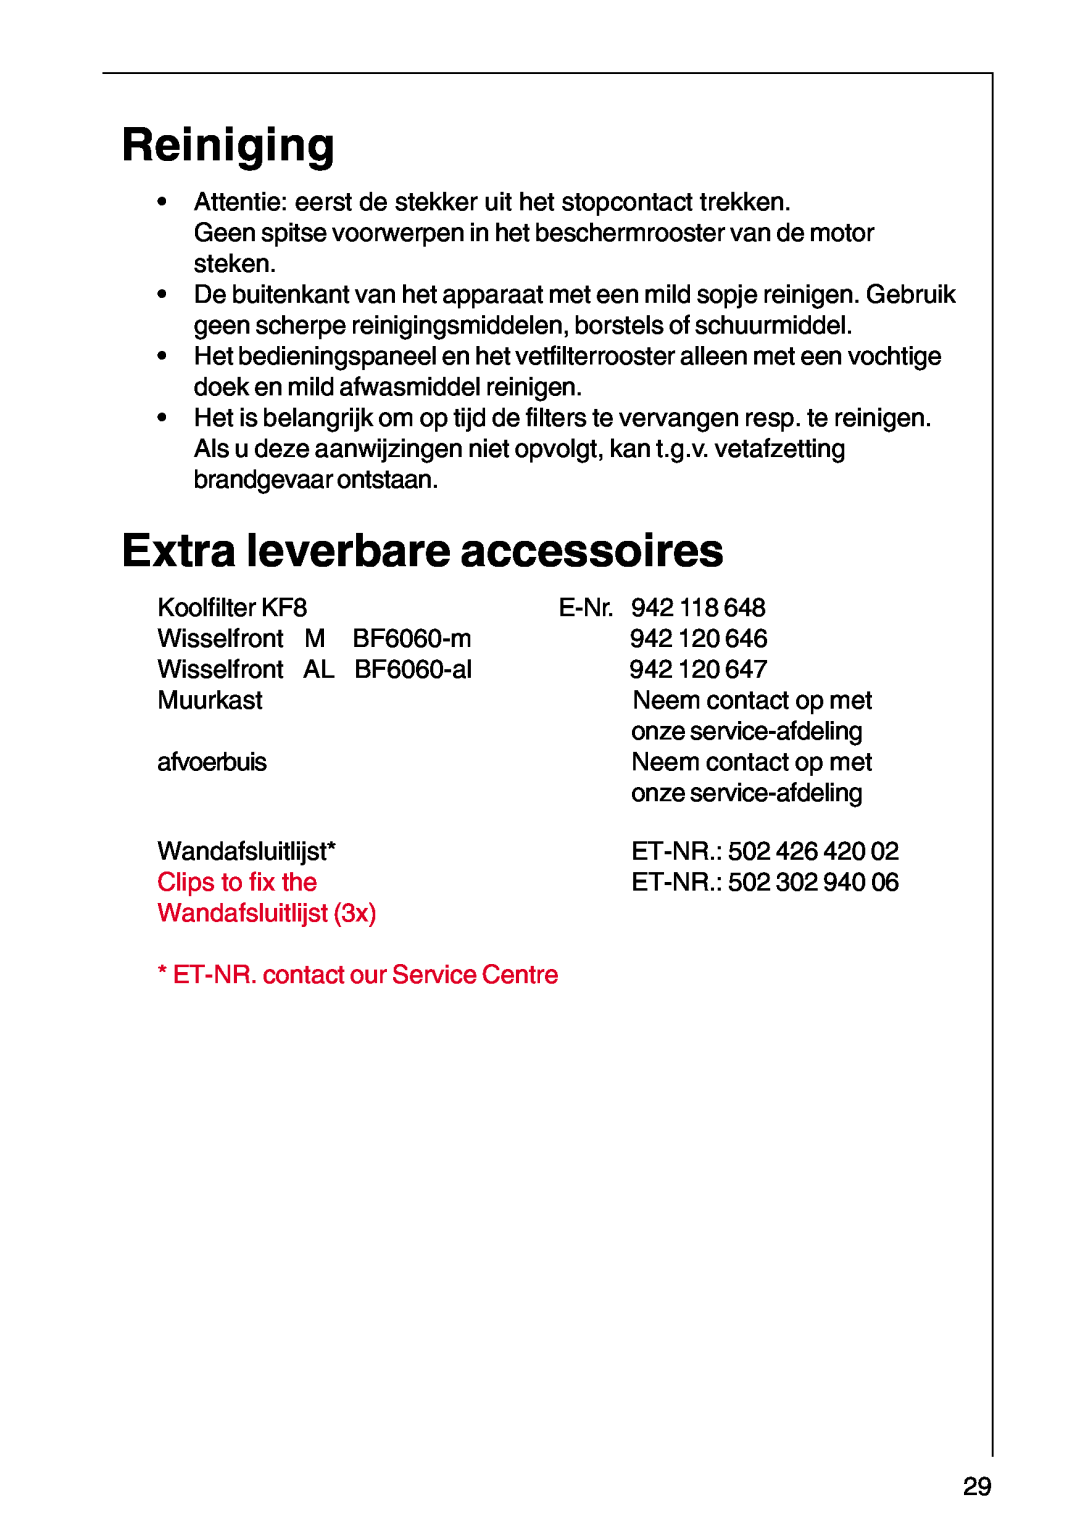 AEG DF 6260 Reiniging, Extra leverbare accessoires, Clips to fix the, Wandafsluitlijst, ET-NR. contact our Service Centre 